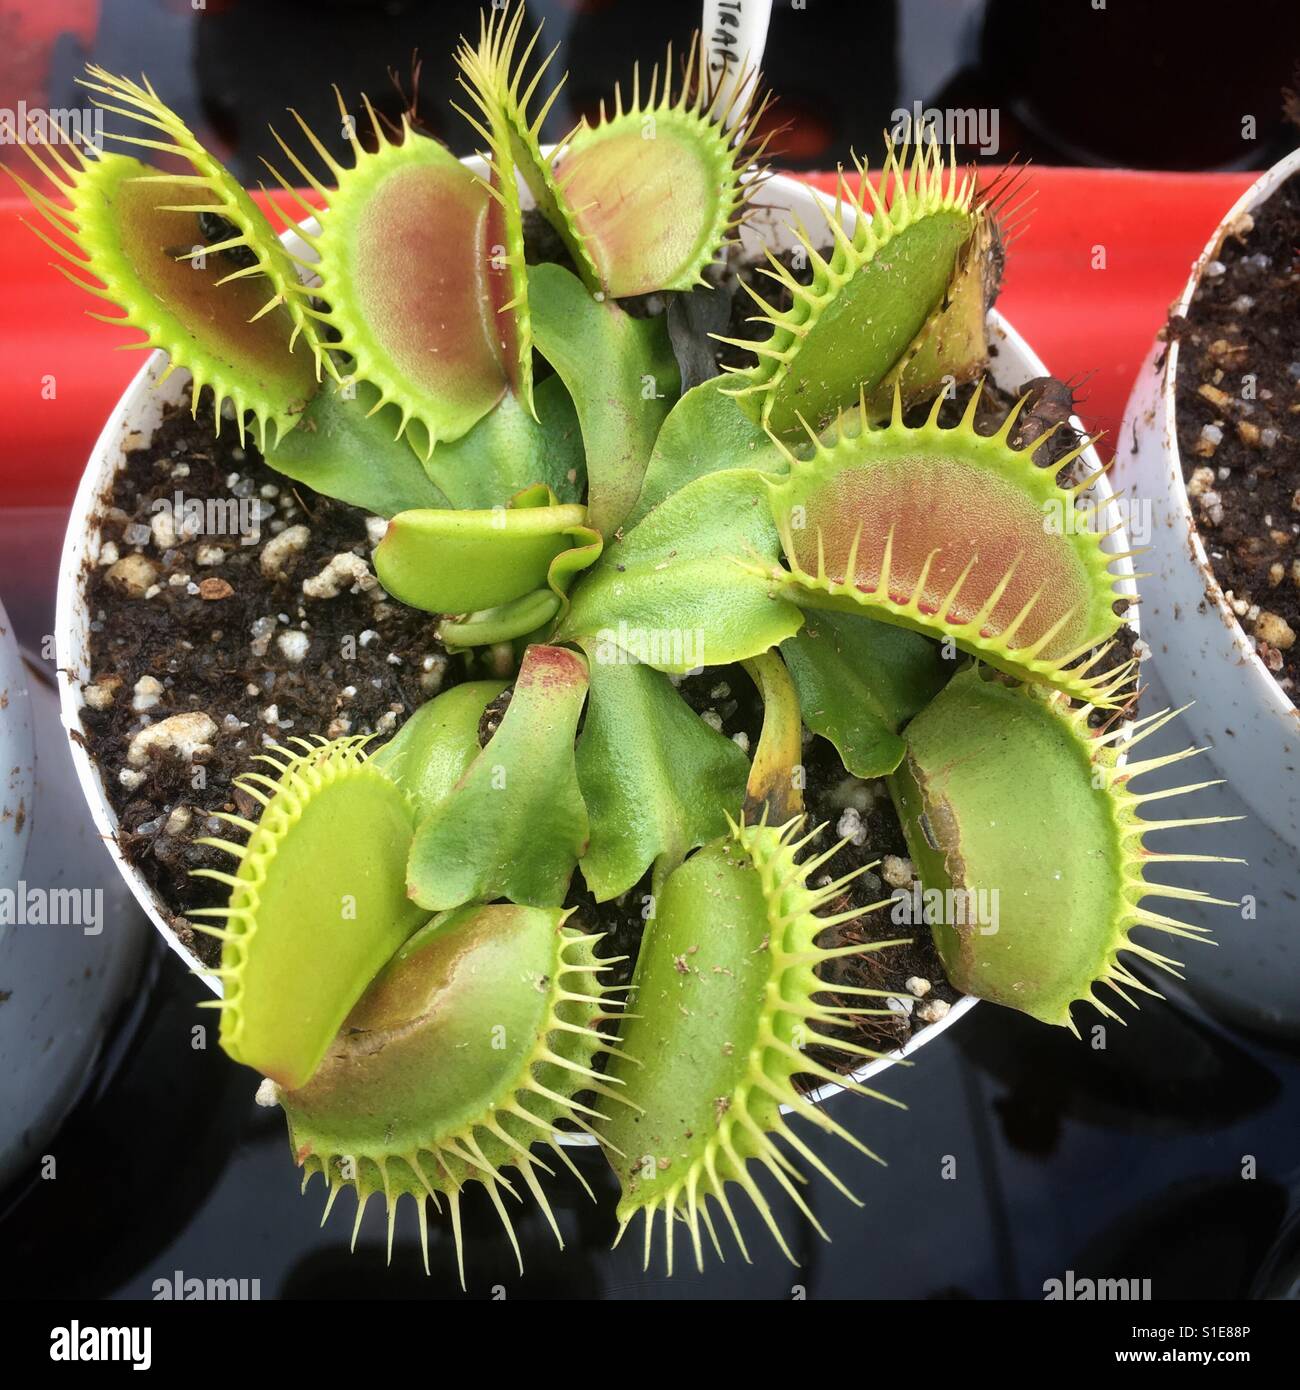 Venus flytrap - carnivorous plant Stock Photo - Alamy